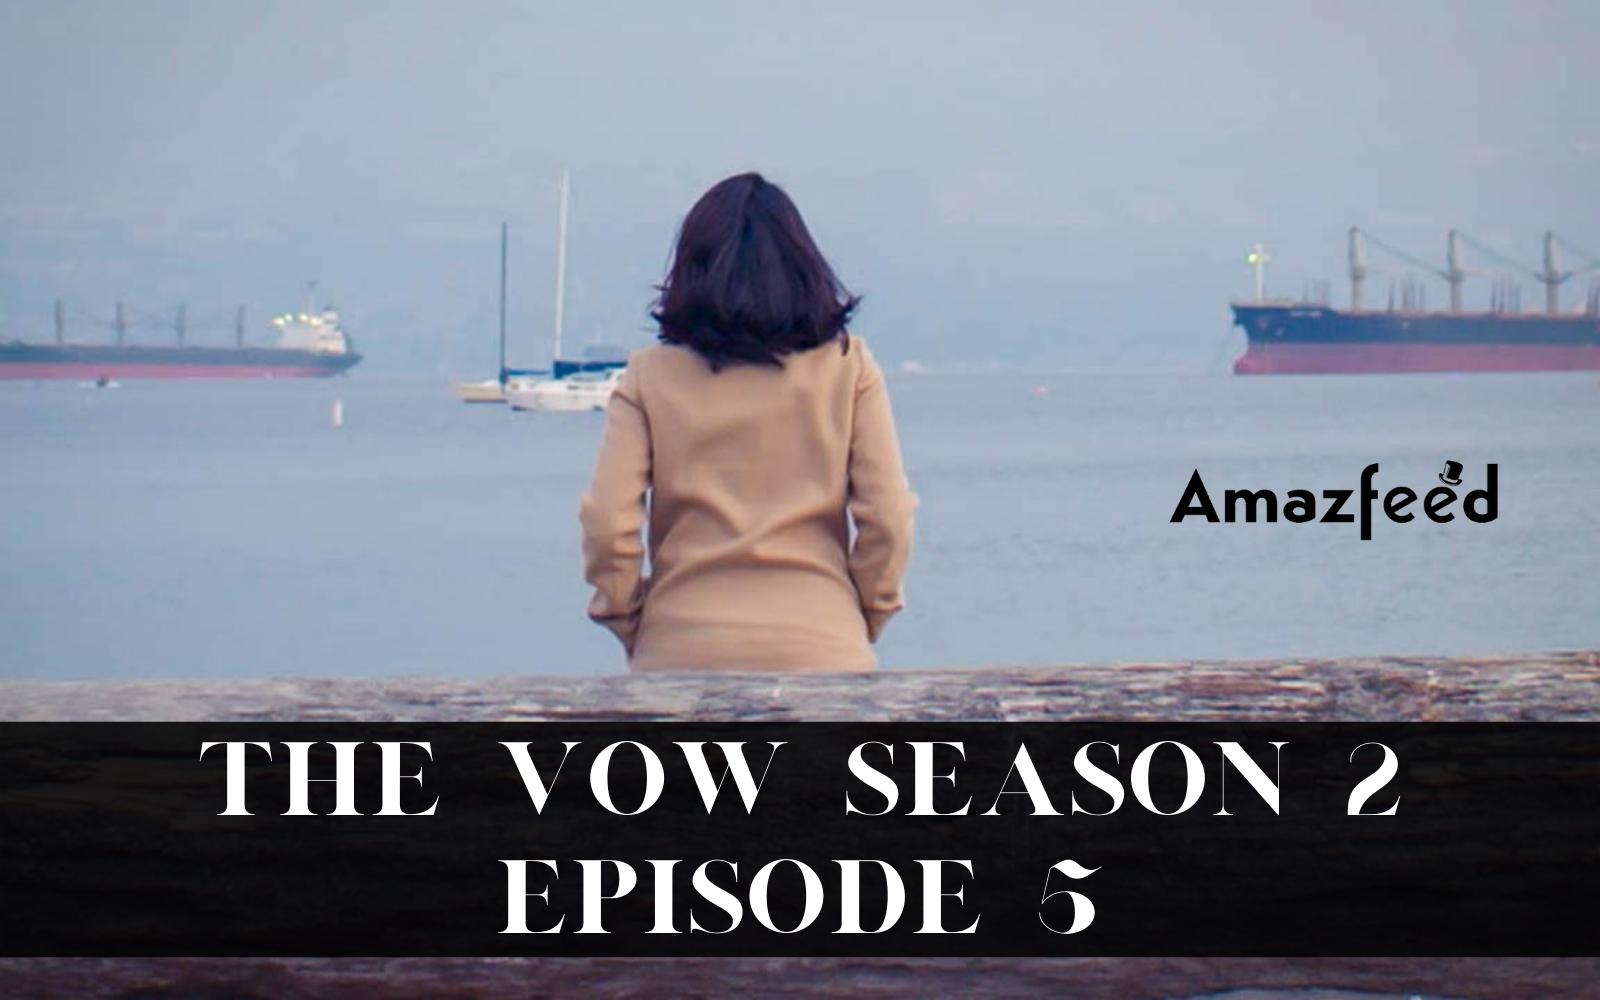 The Vow Season 2 episode 5